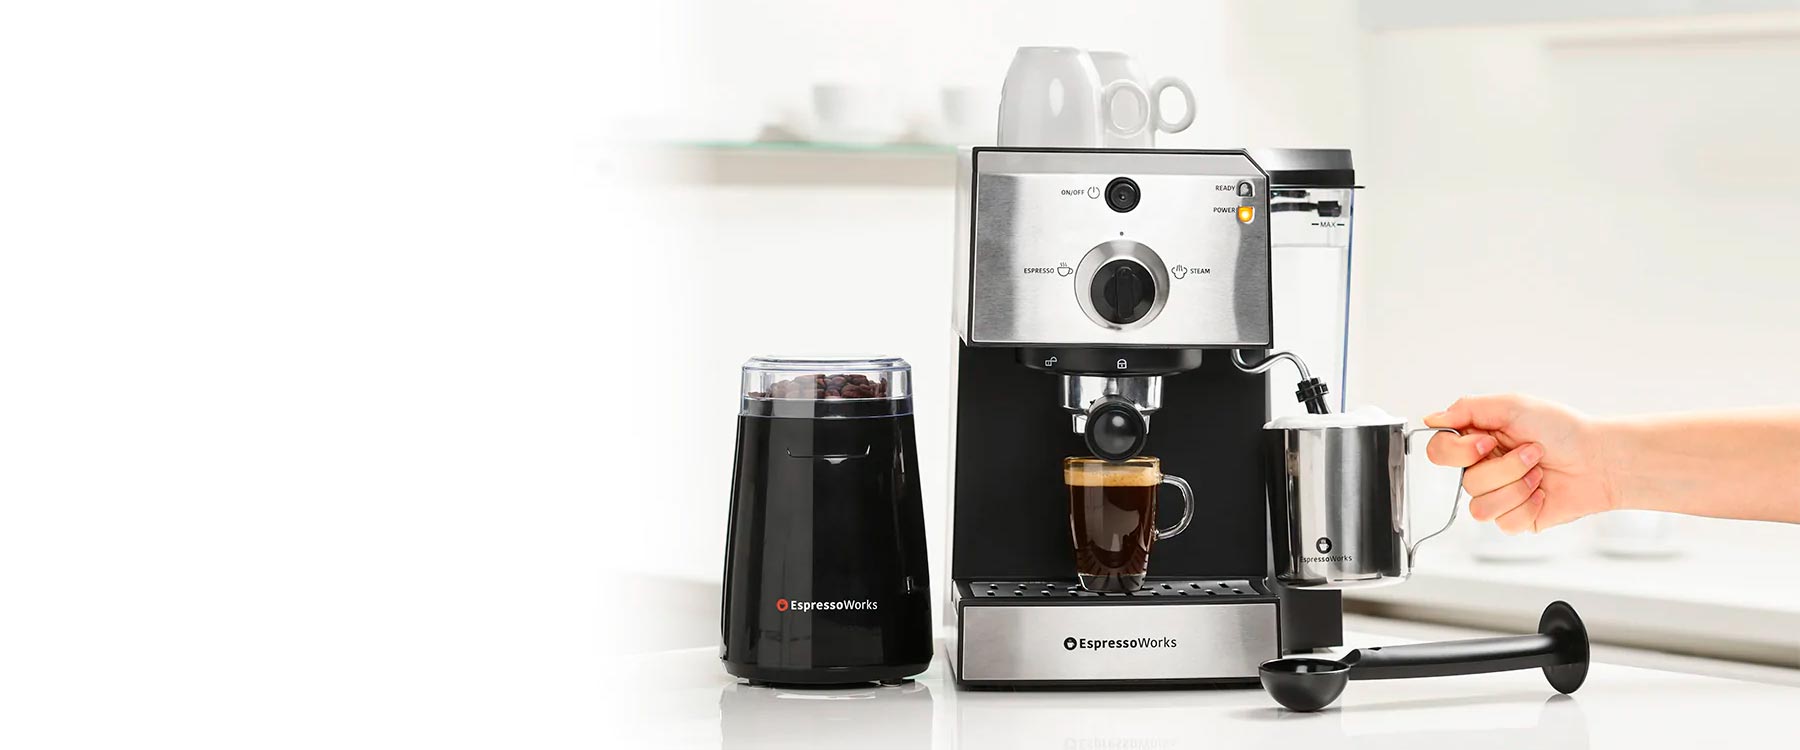 EspressoWorks 15-bar Espresso Machine